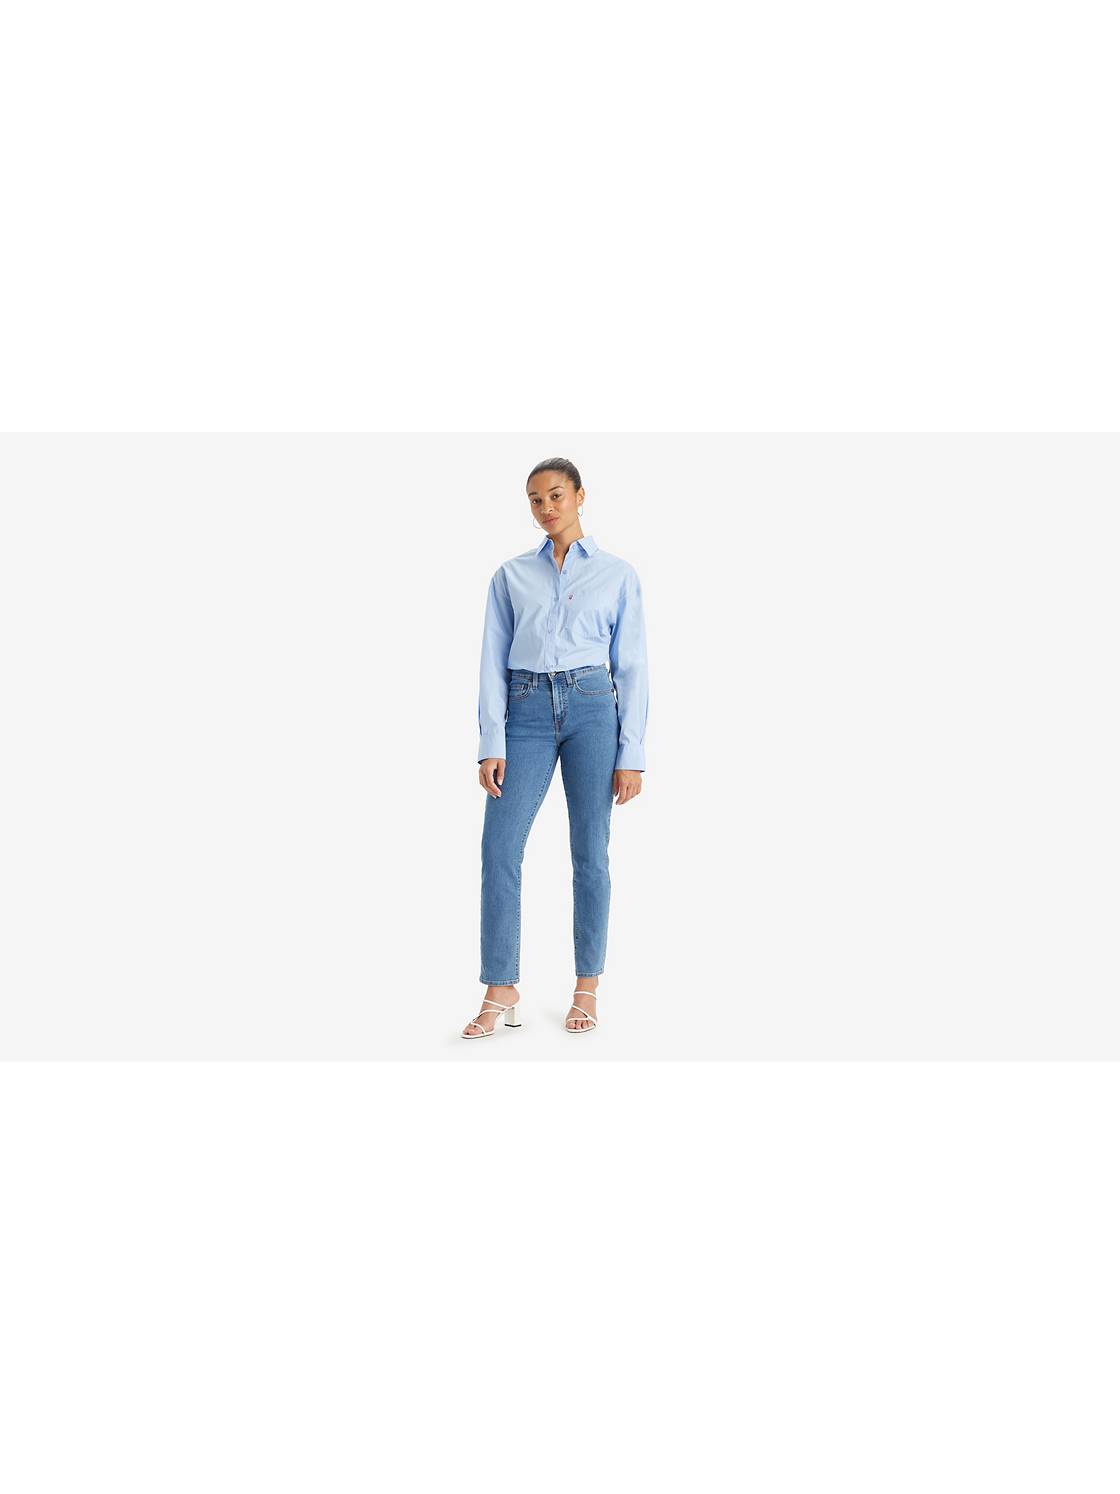 Womens Elastic Waist Jeans Ladies Straight Leg Regular Fit Denim Size 12-26